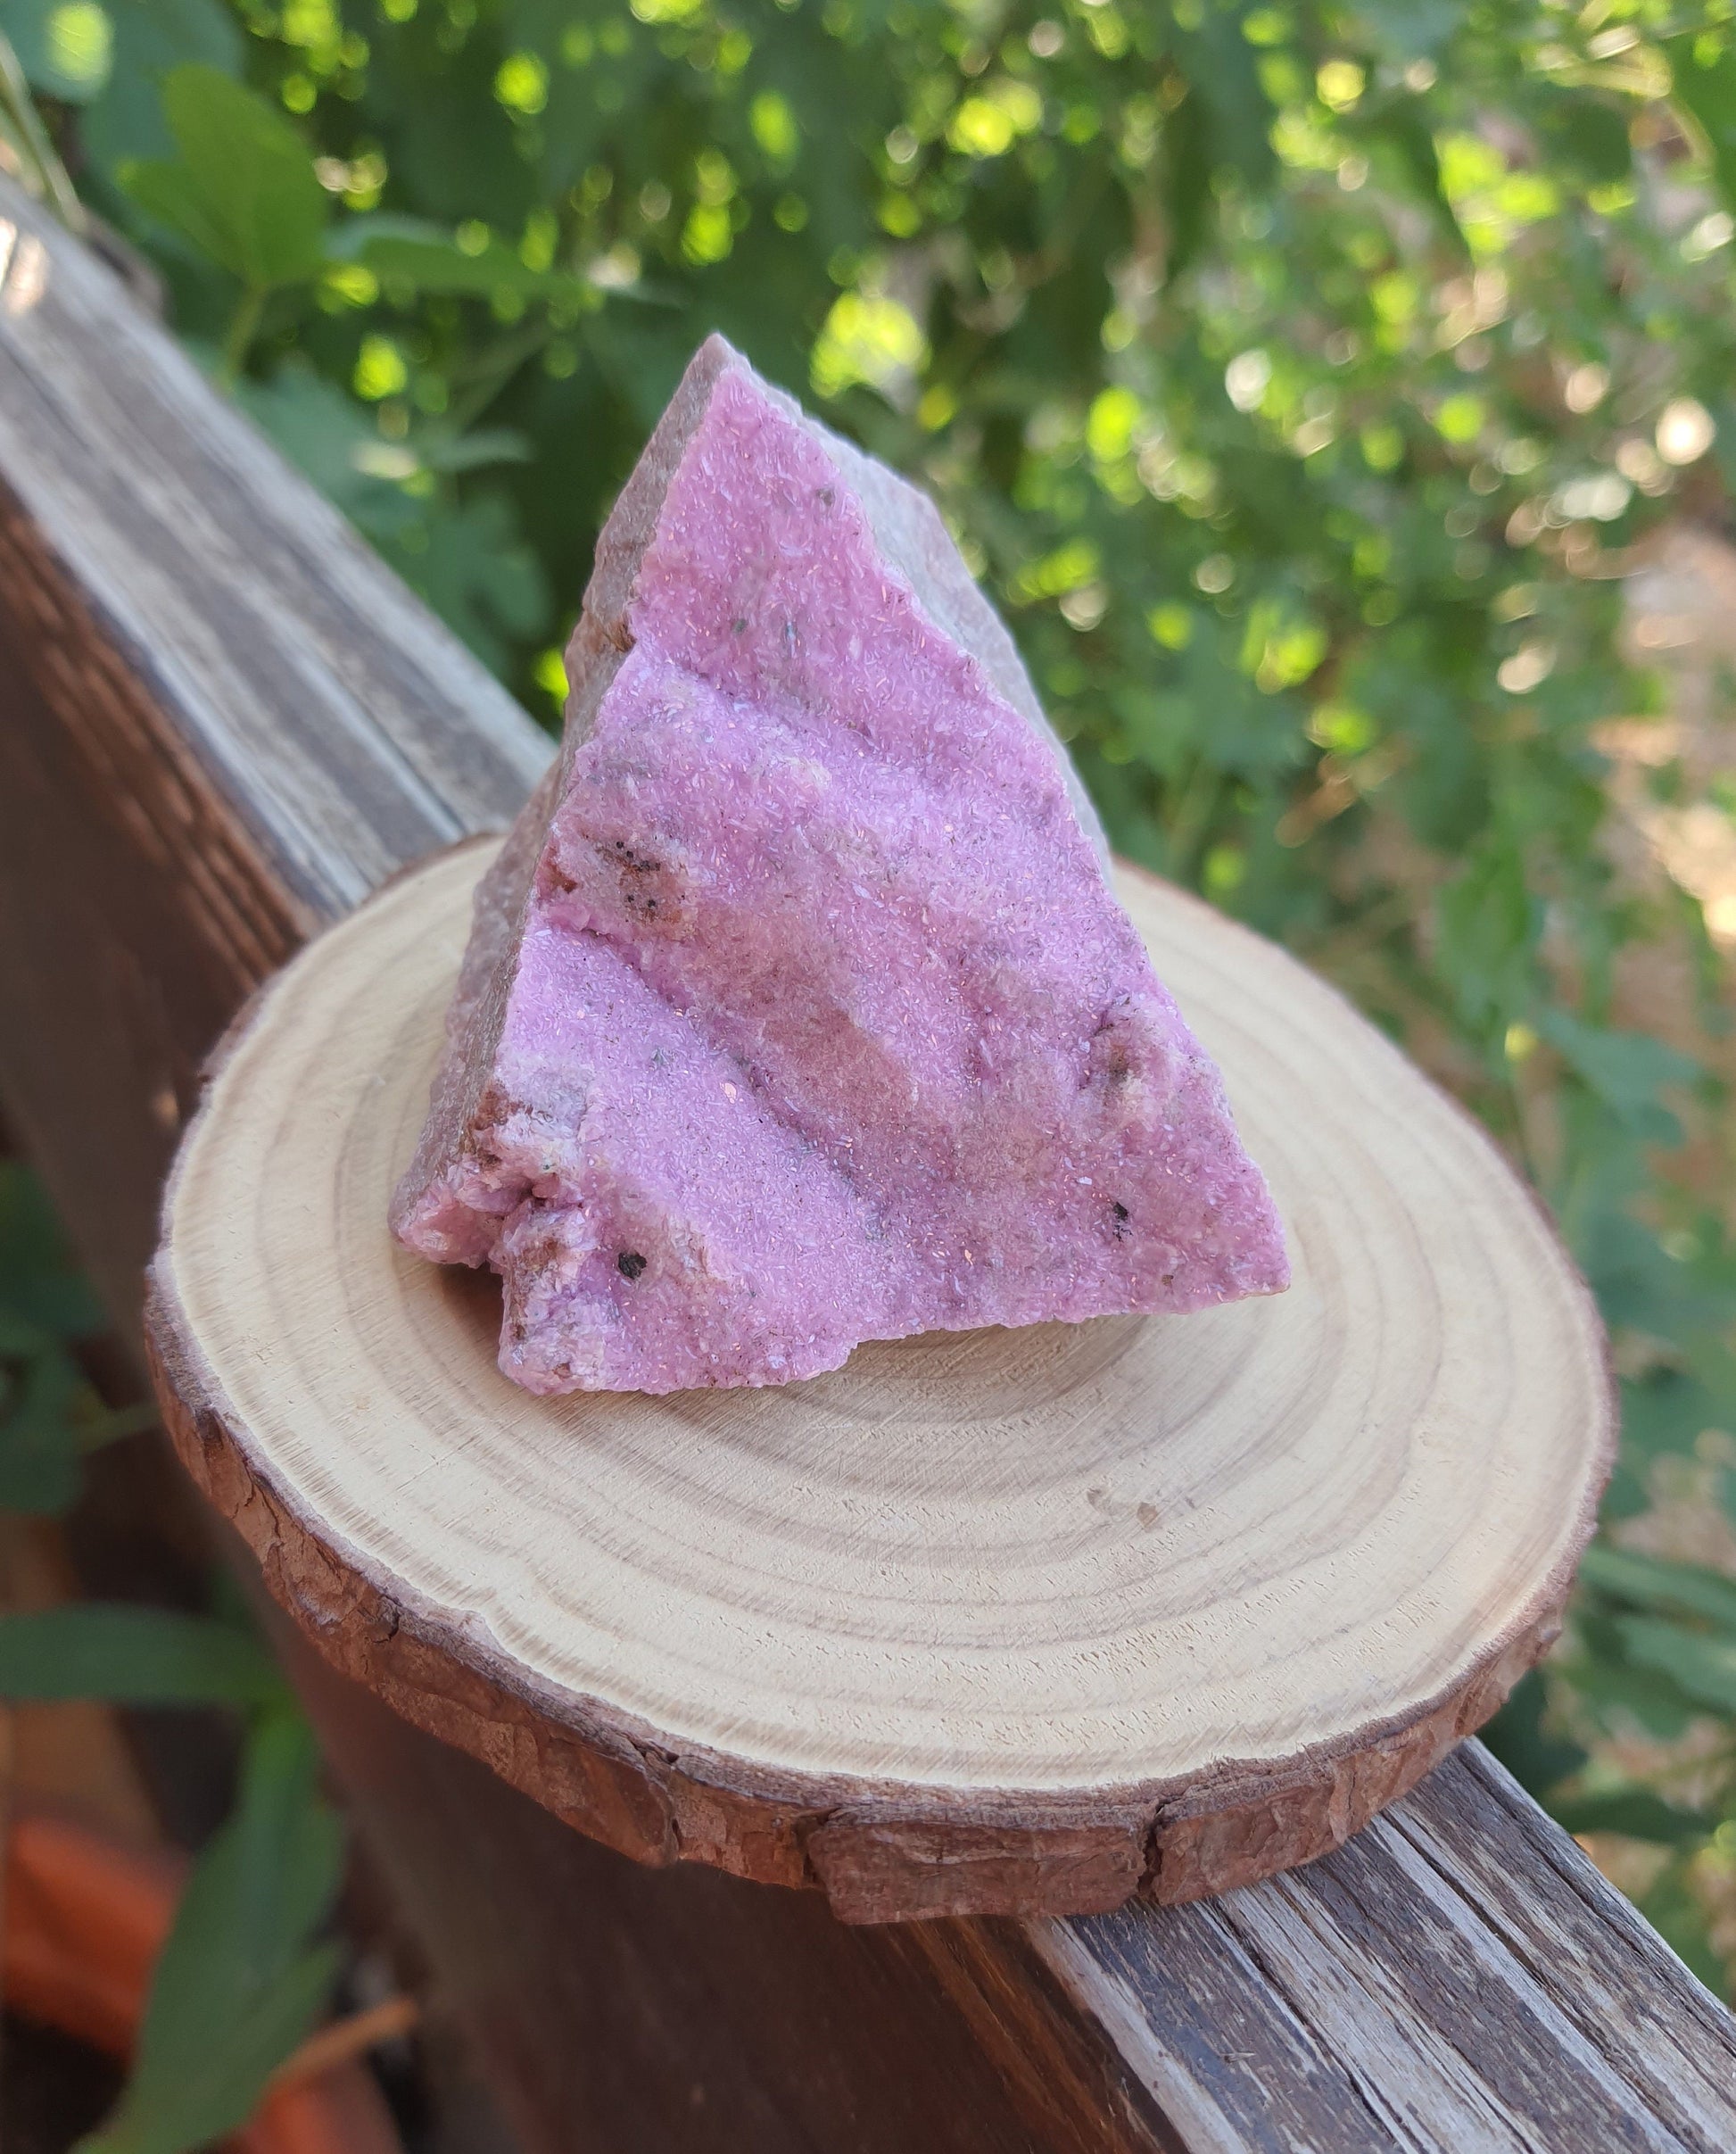 Pink Cobalt Calcite Druzy Raw Natural Clusters Mineral Specimen 182g